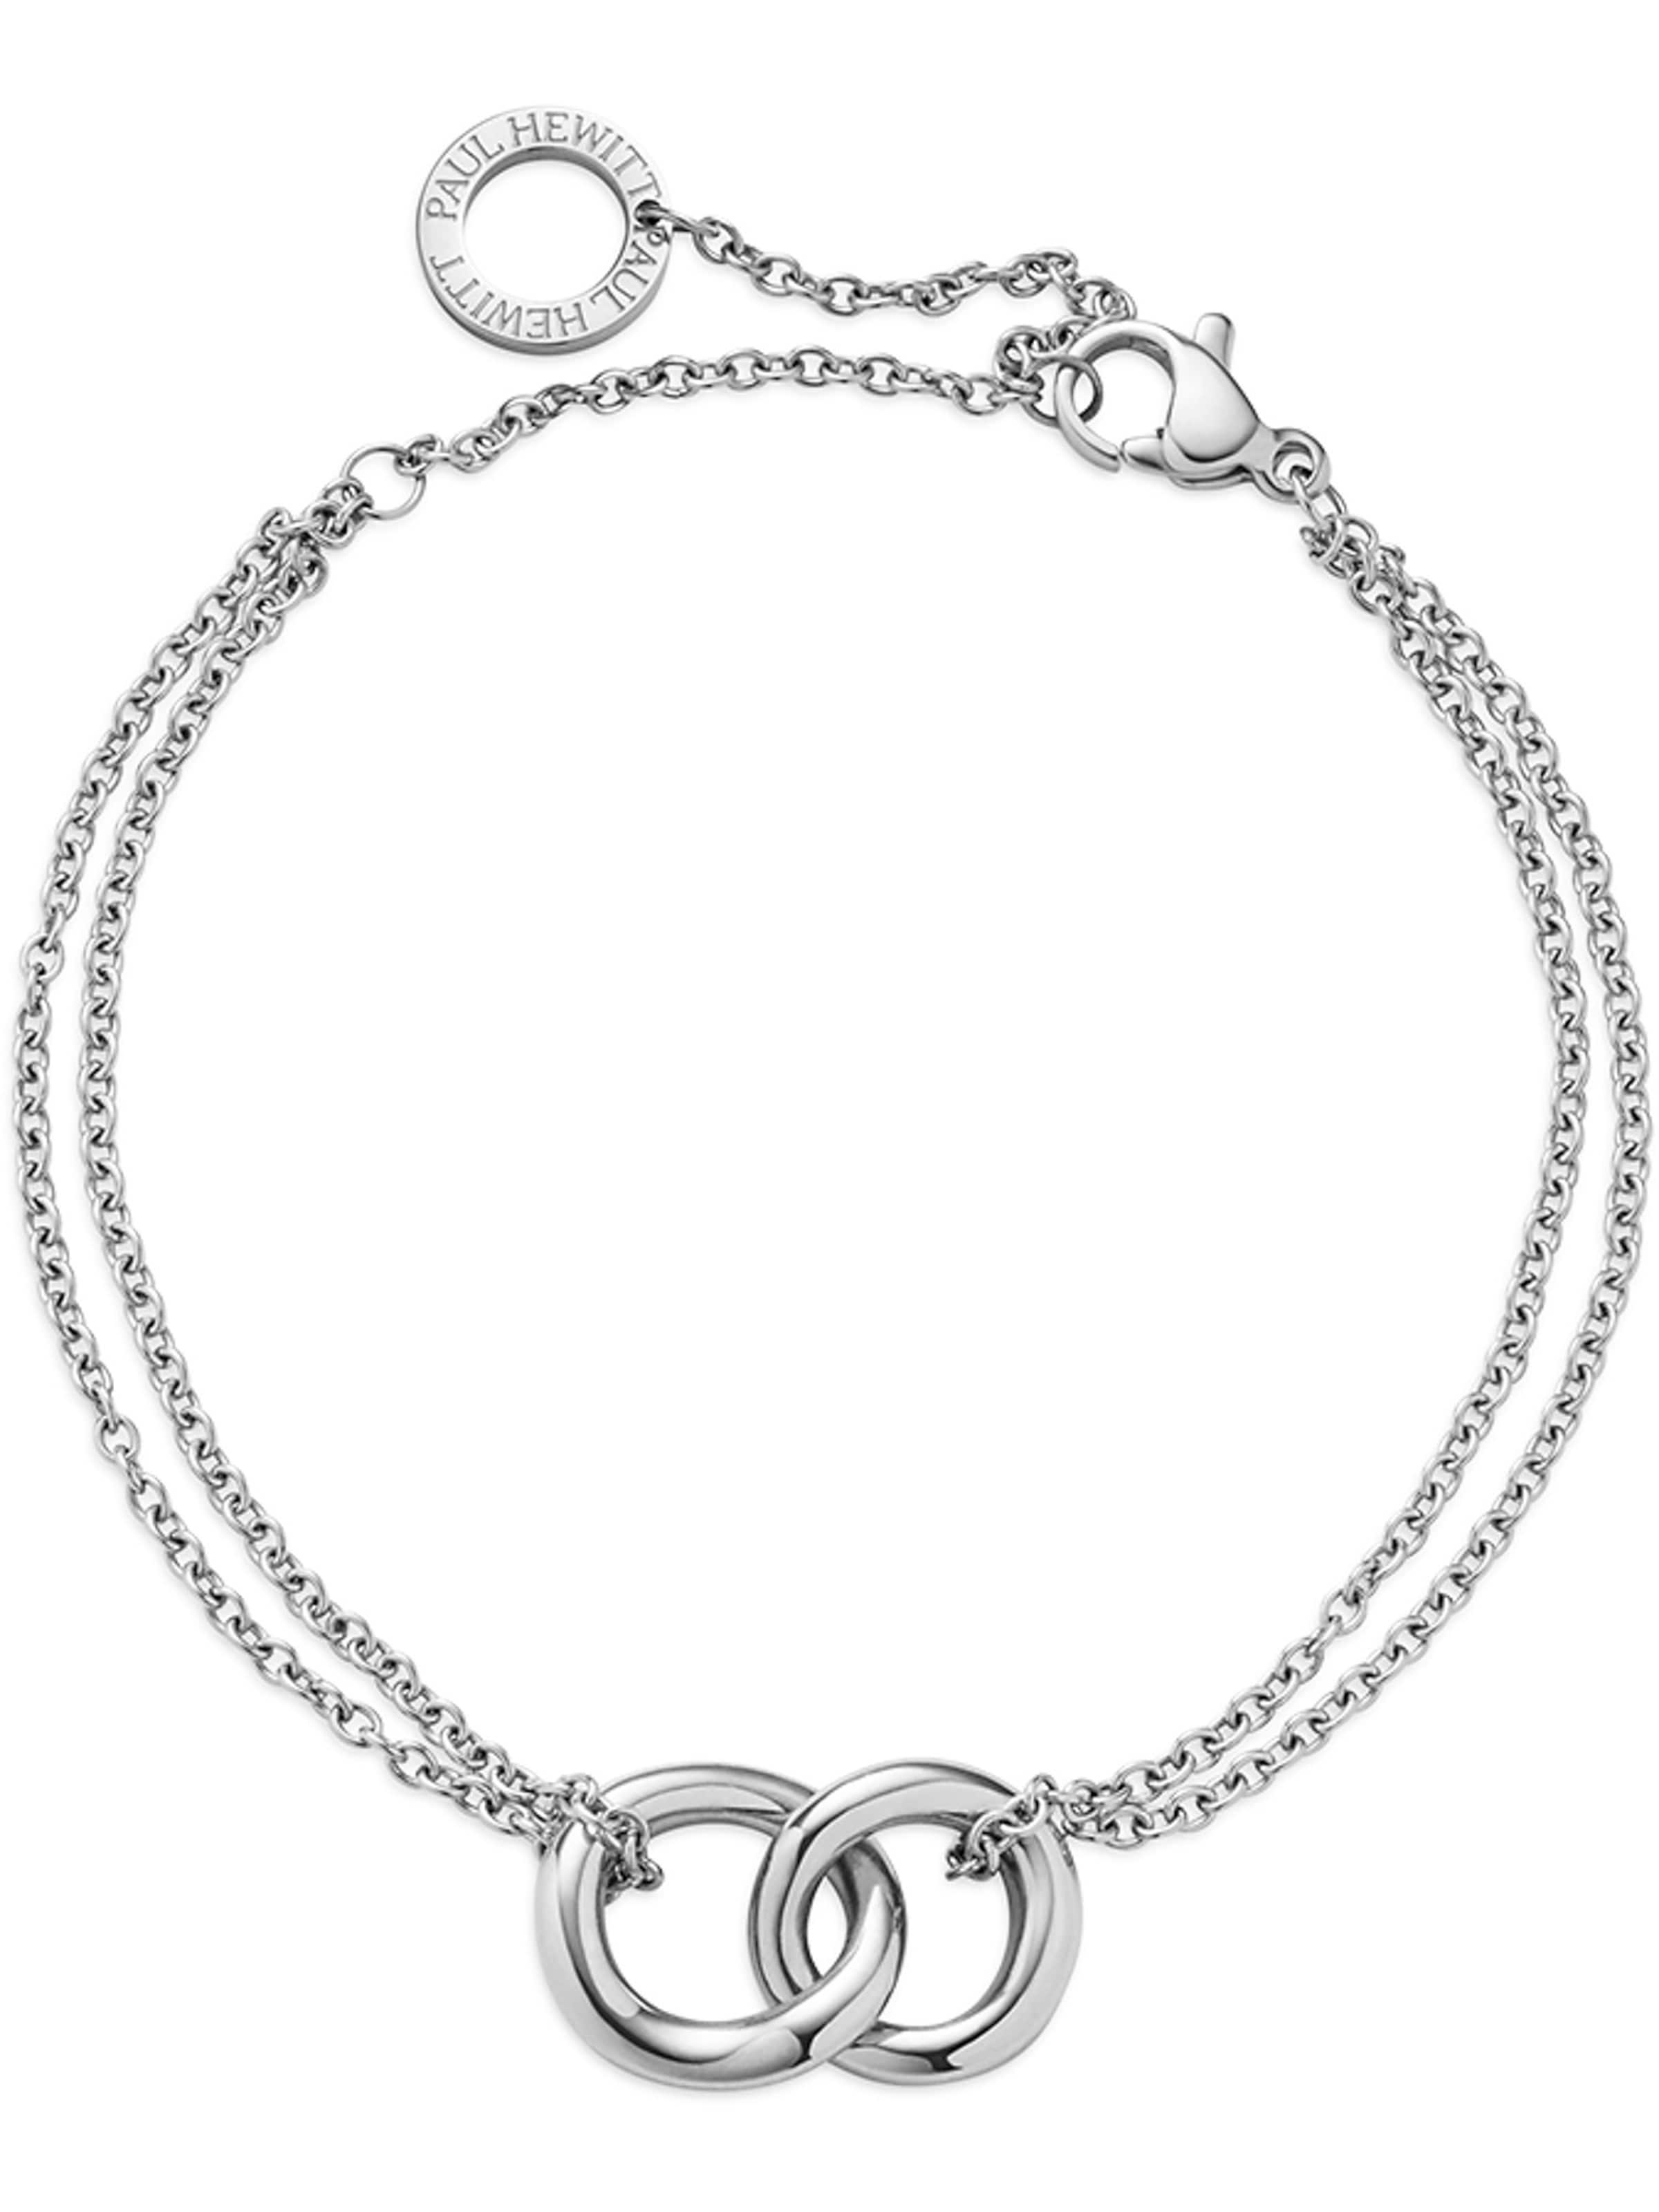 4-row black and white Maitresse spring bracelet that rips